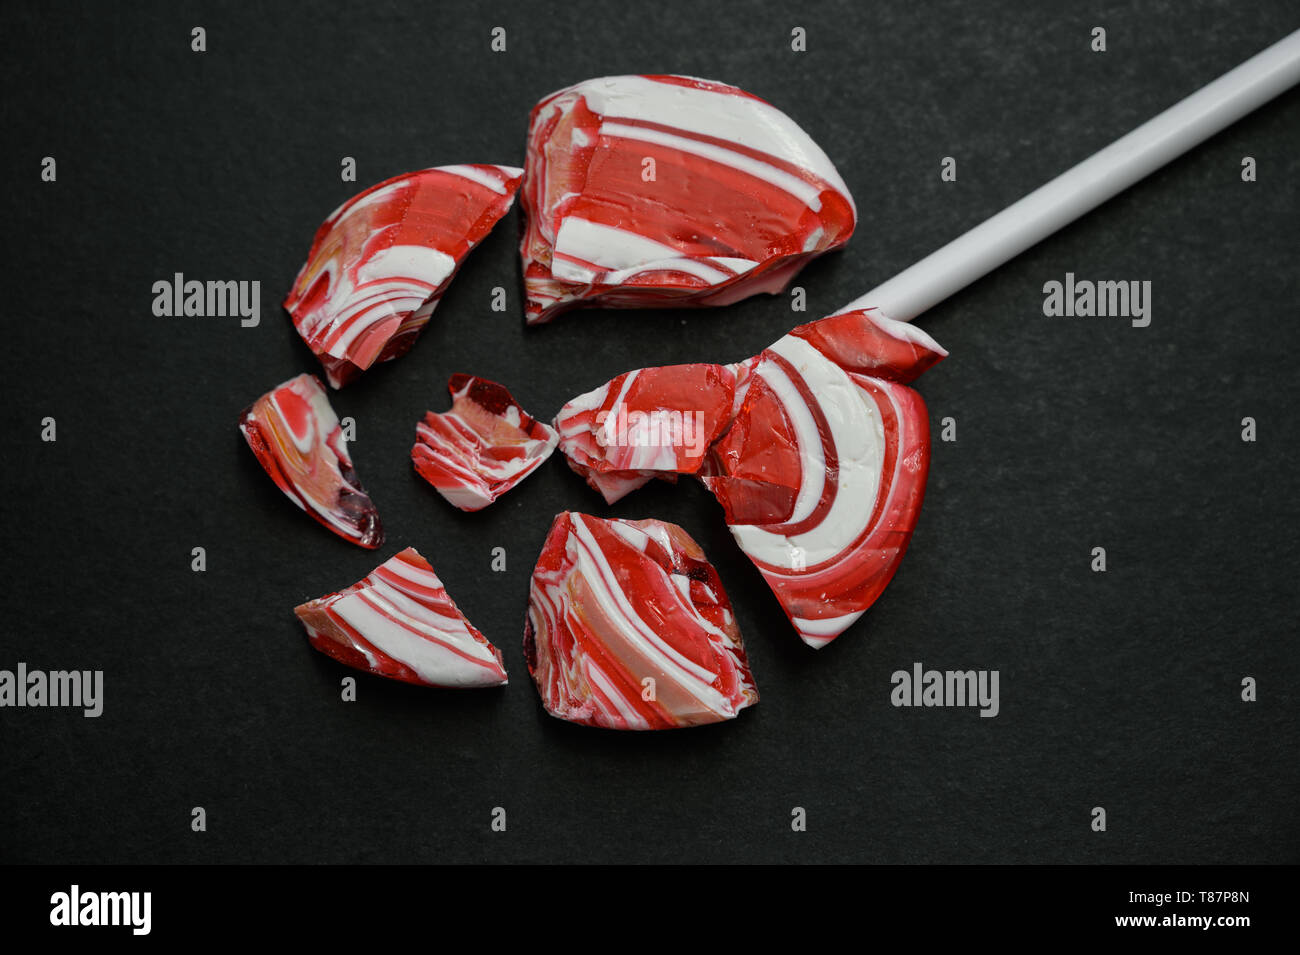 Broken lollipop on a dark background Stock Photo - Alamy